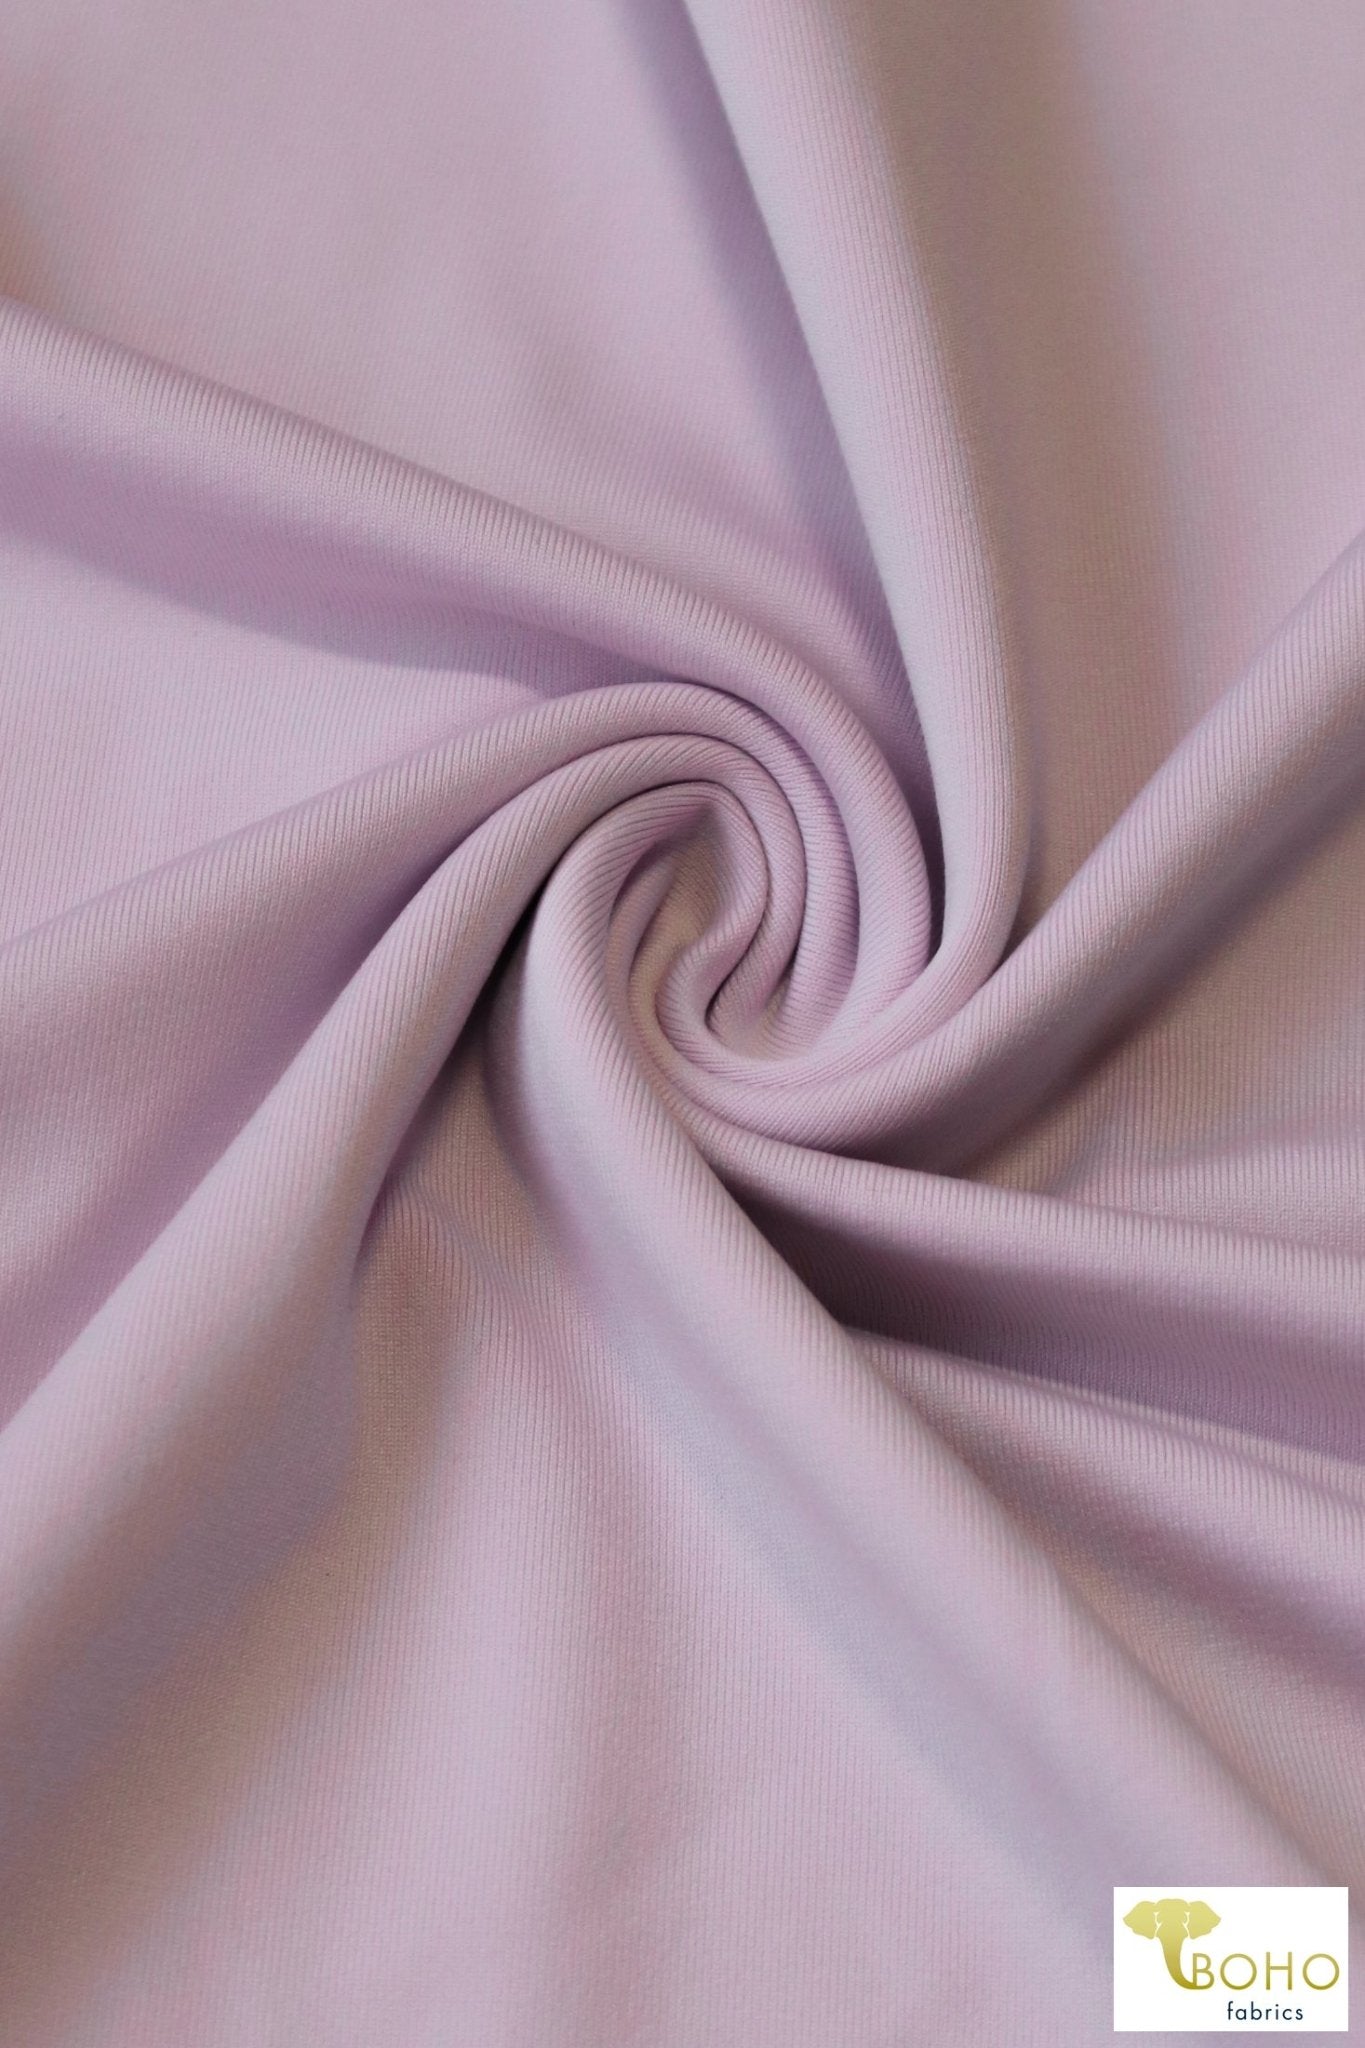 Light Lavender Pink, Athletic Knit. ATH-132 - Boho Fabrics